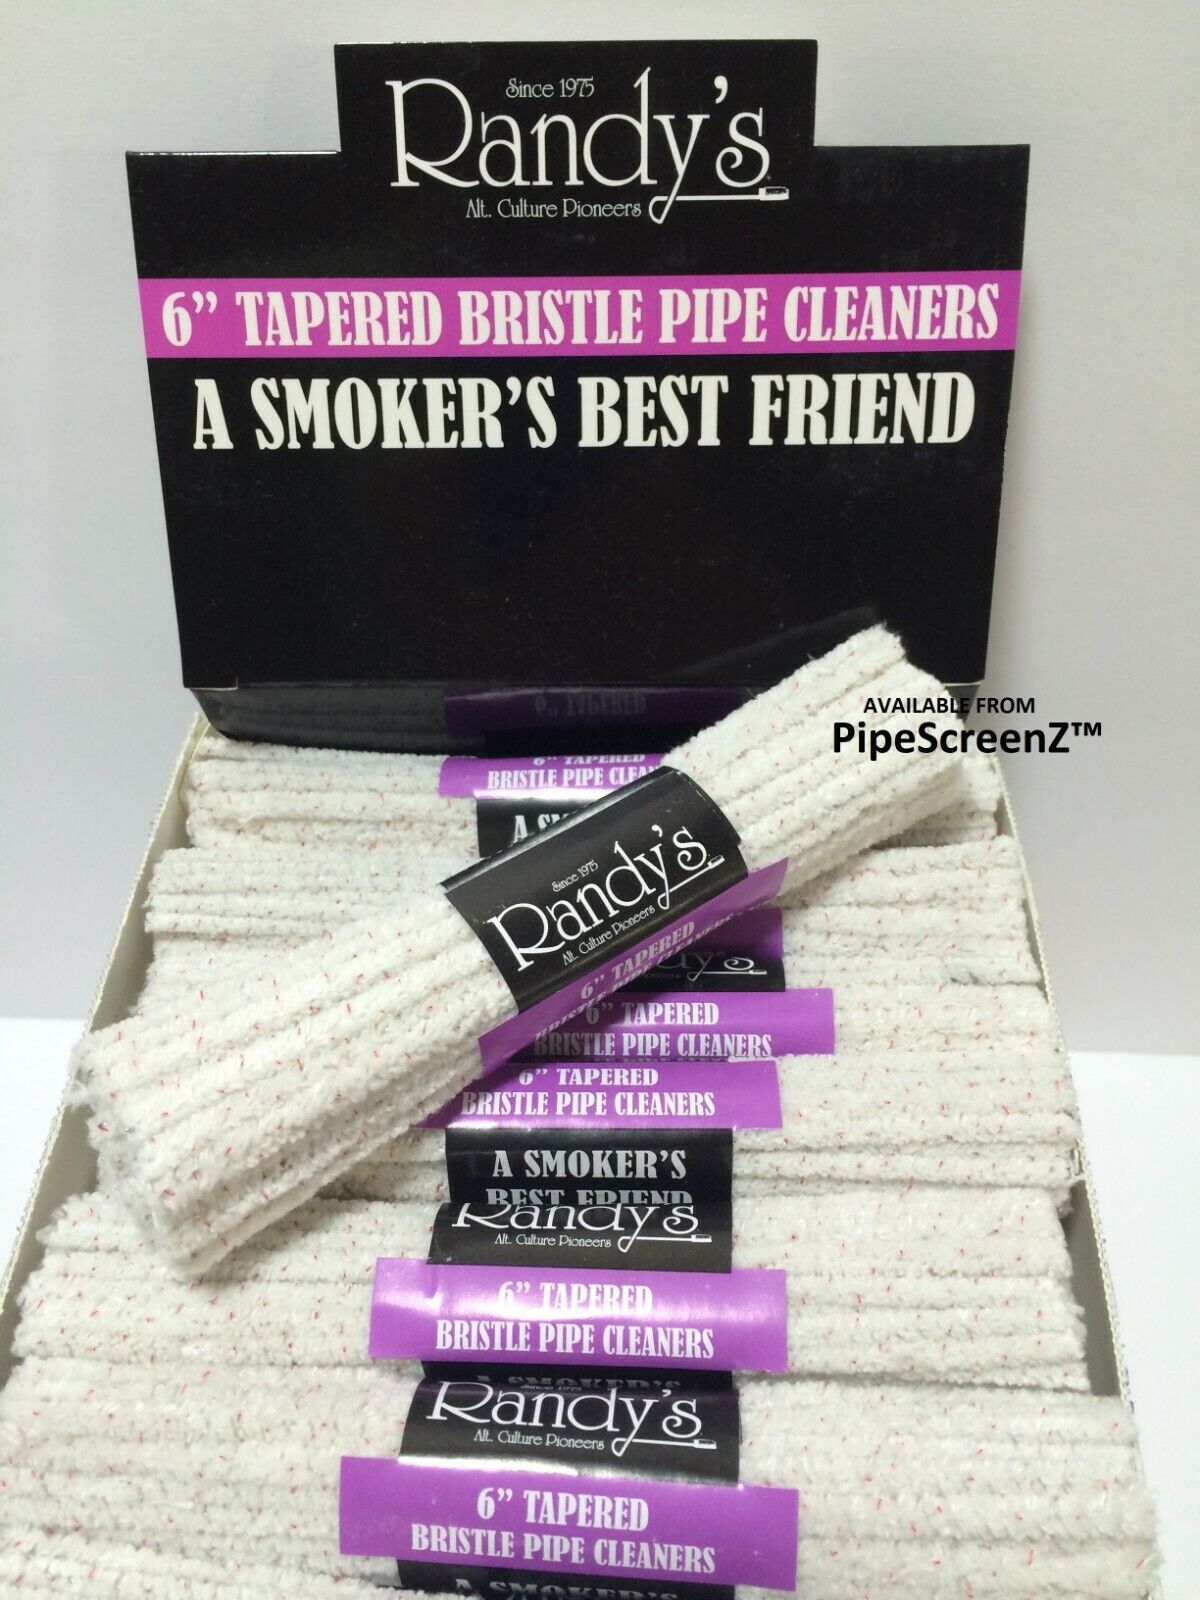 3X Bundles Randy's Black Label Bristle Pipe Cleaners 24 per bundle/ 72 total